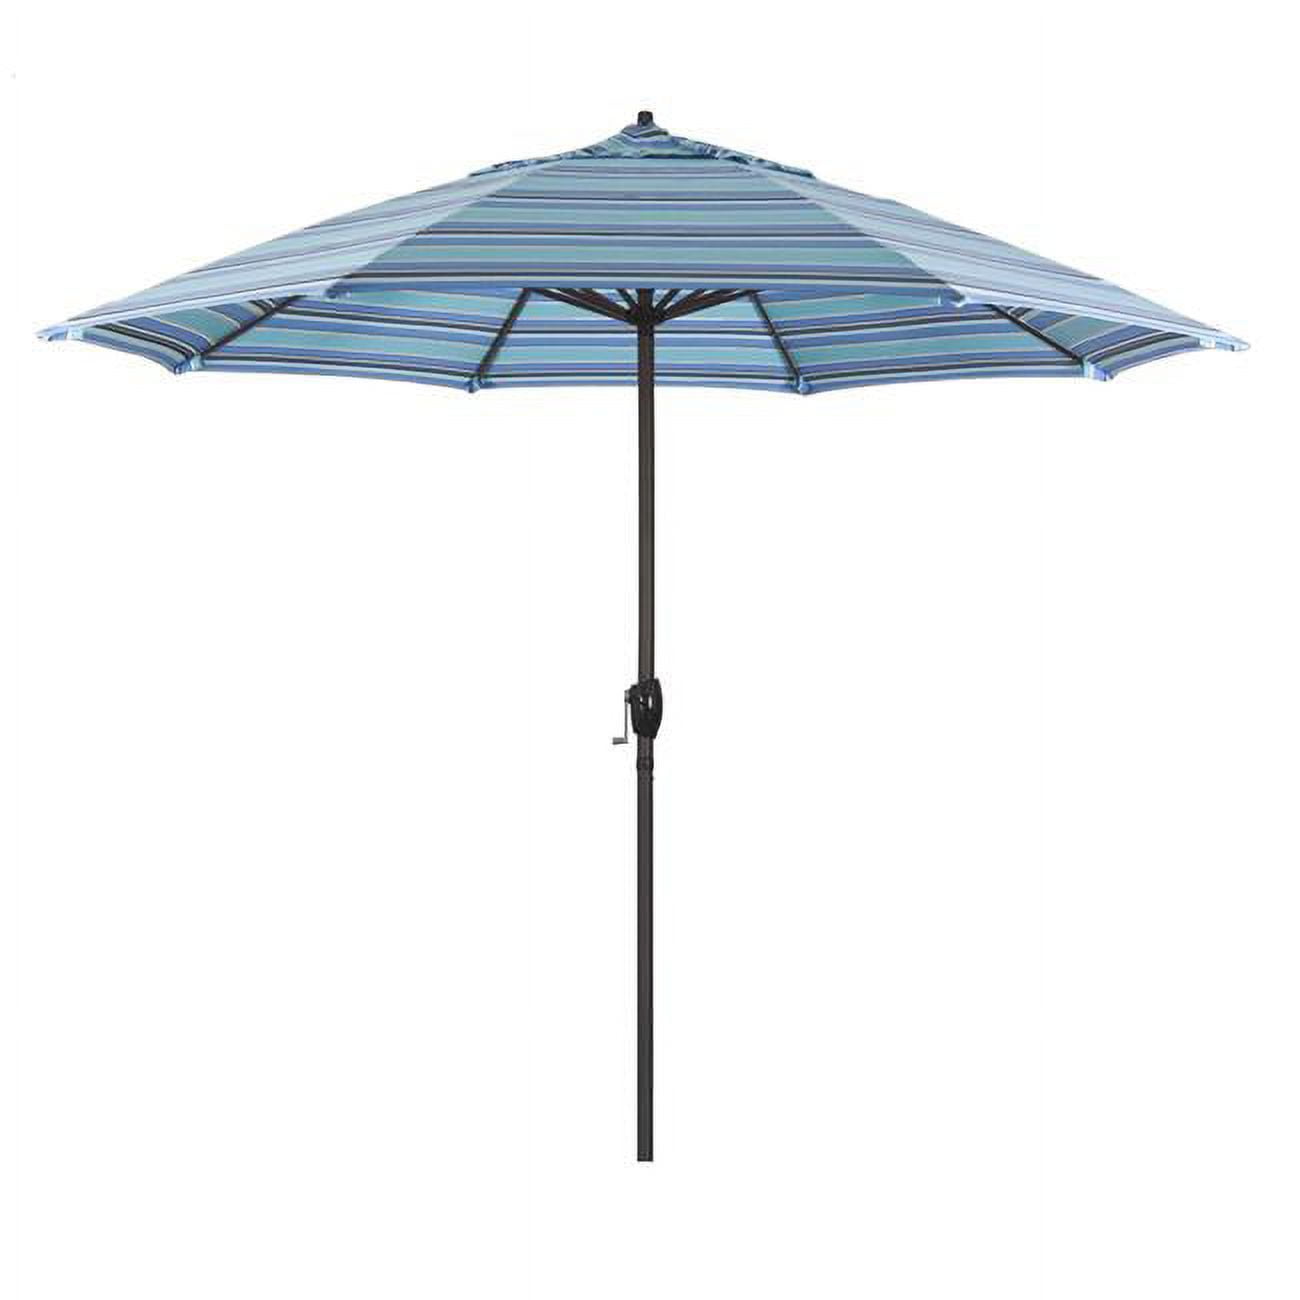 Ata908117-56001 9 Ft. Casa Series Patio Bronze Auto Tilt Crank Lift - Sunbrella 1a Dolce Oasis Fabric